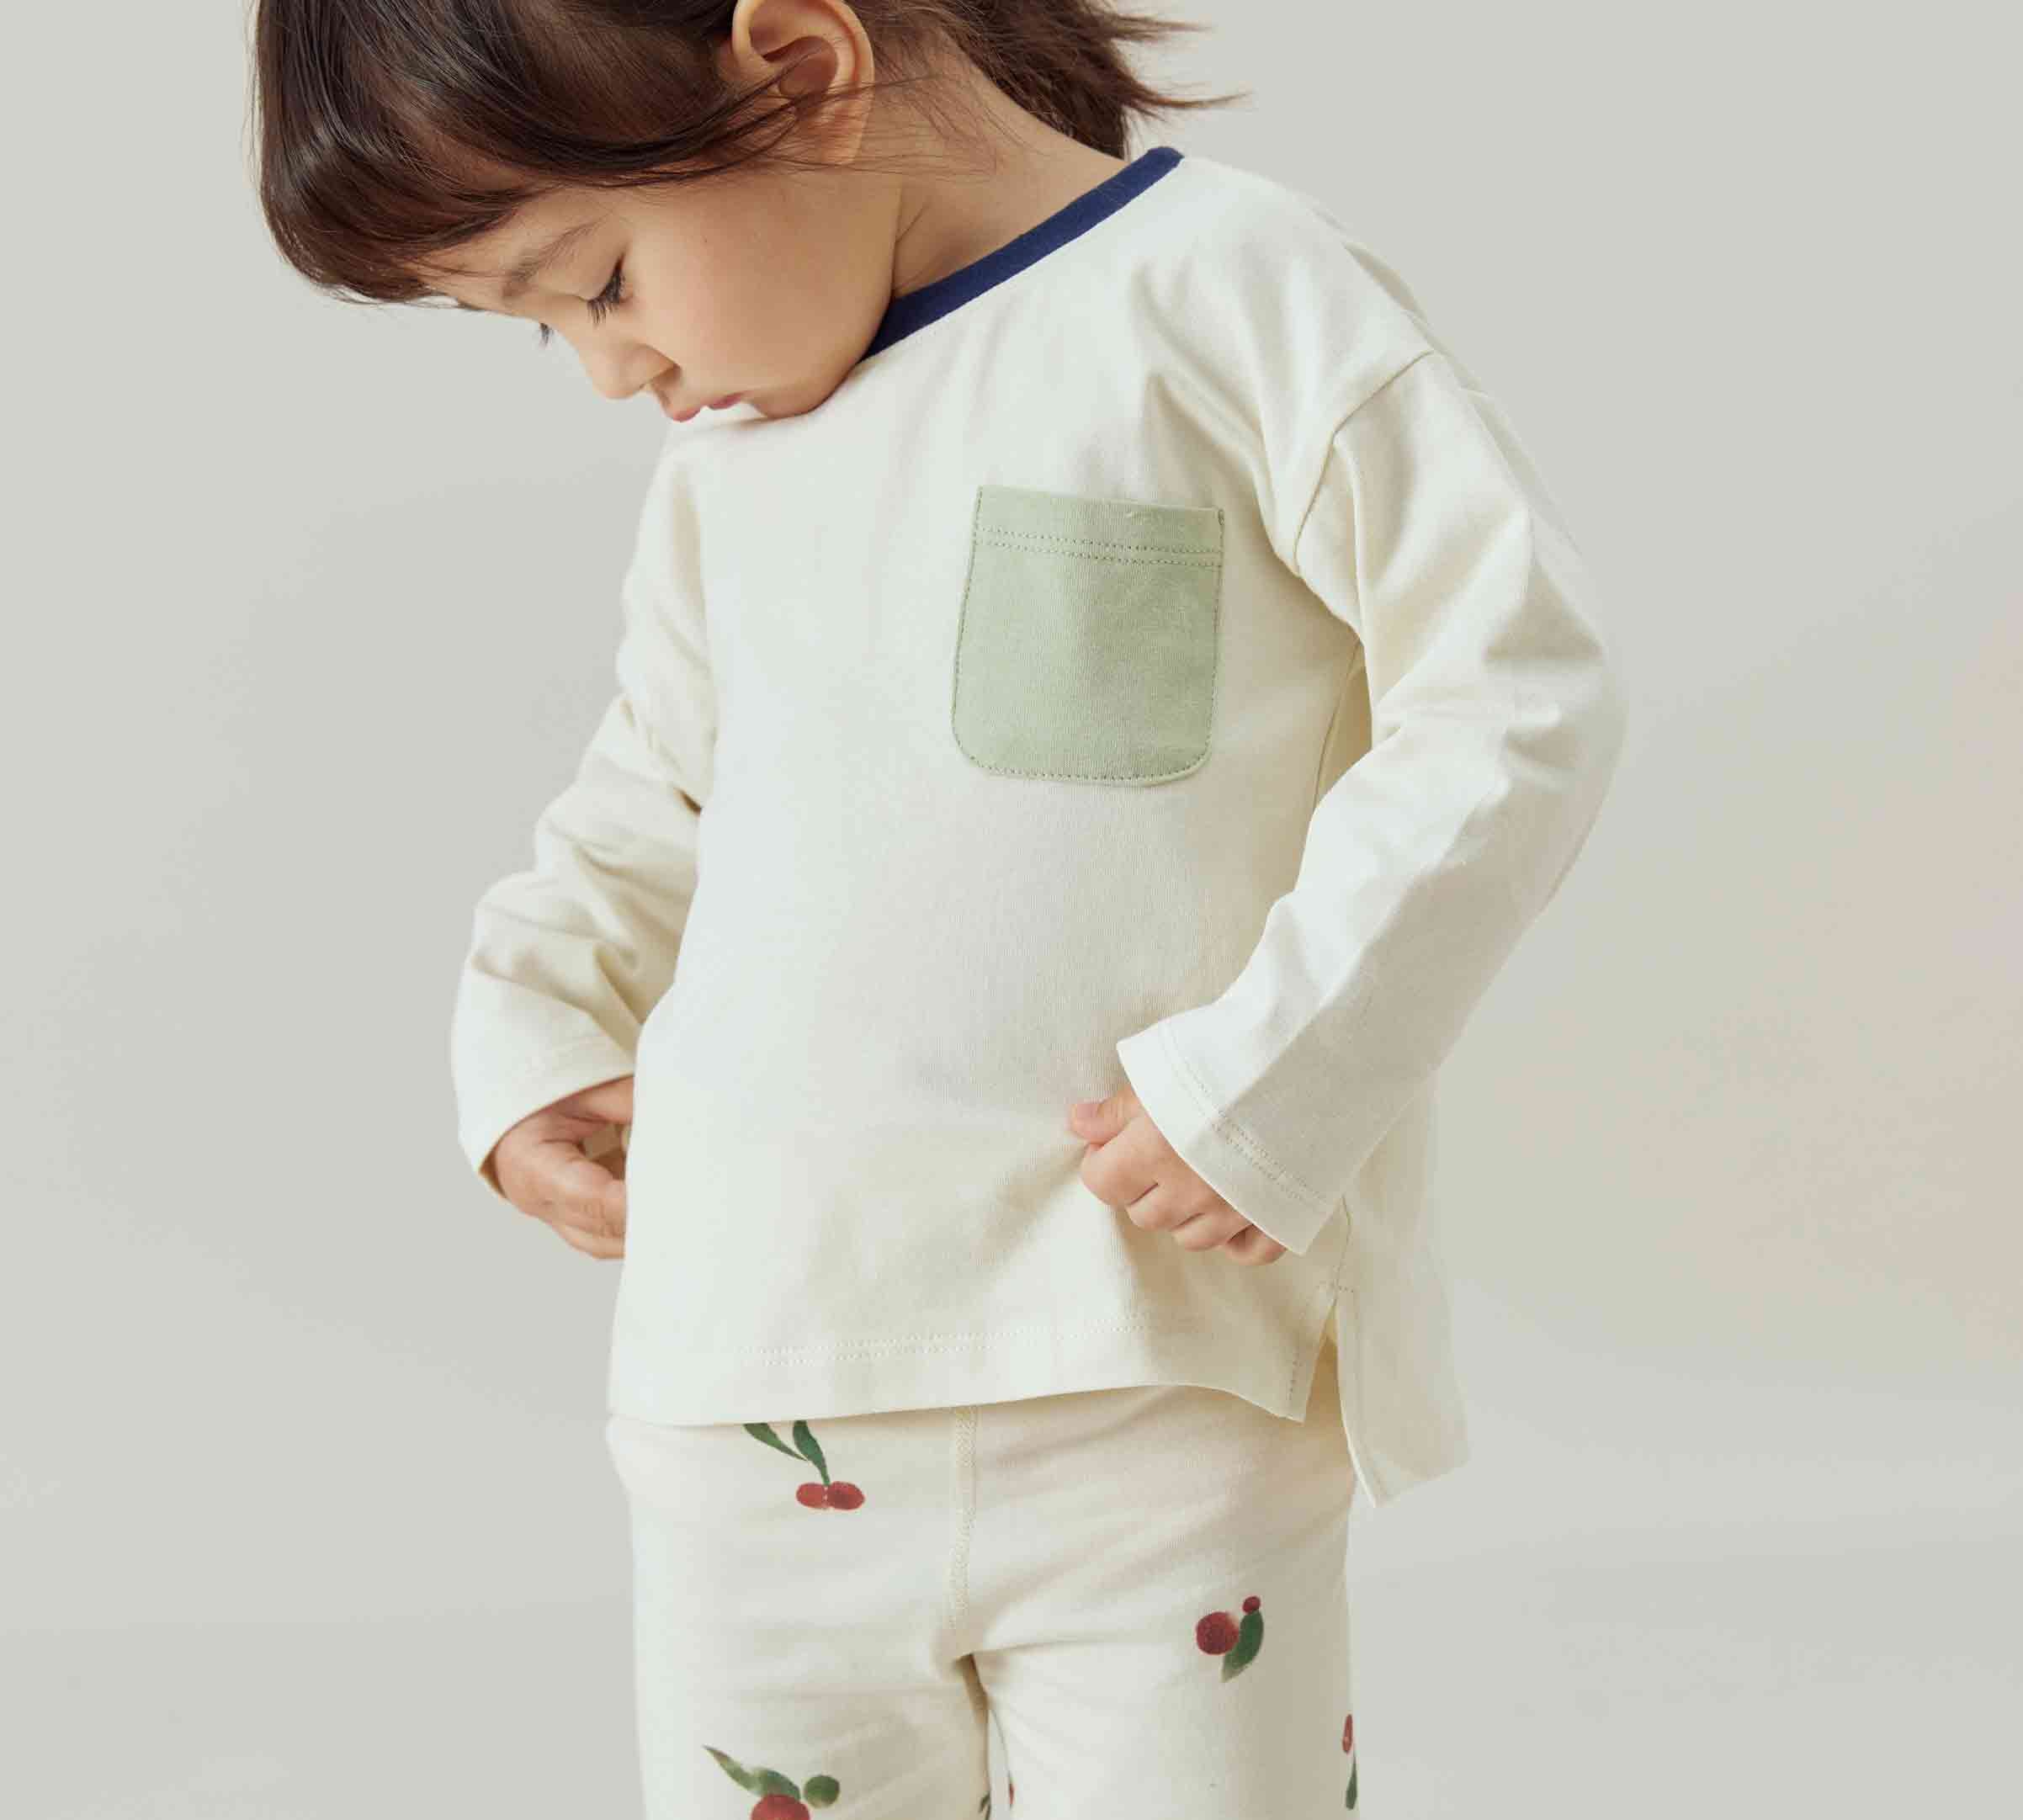 Toddler Long Sleeve Tee Shirt-Cream